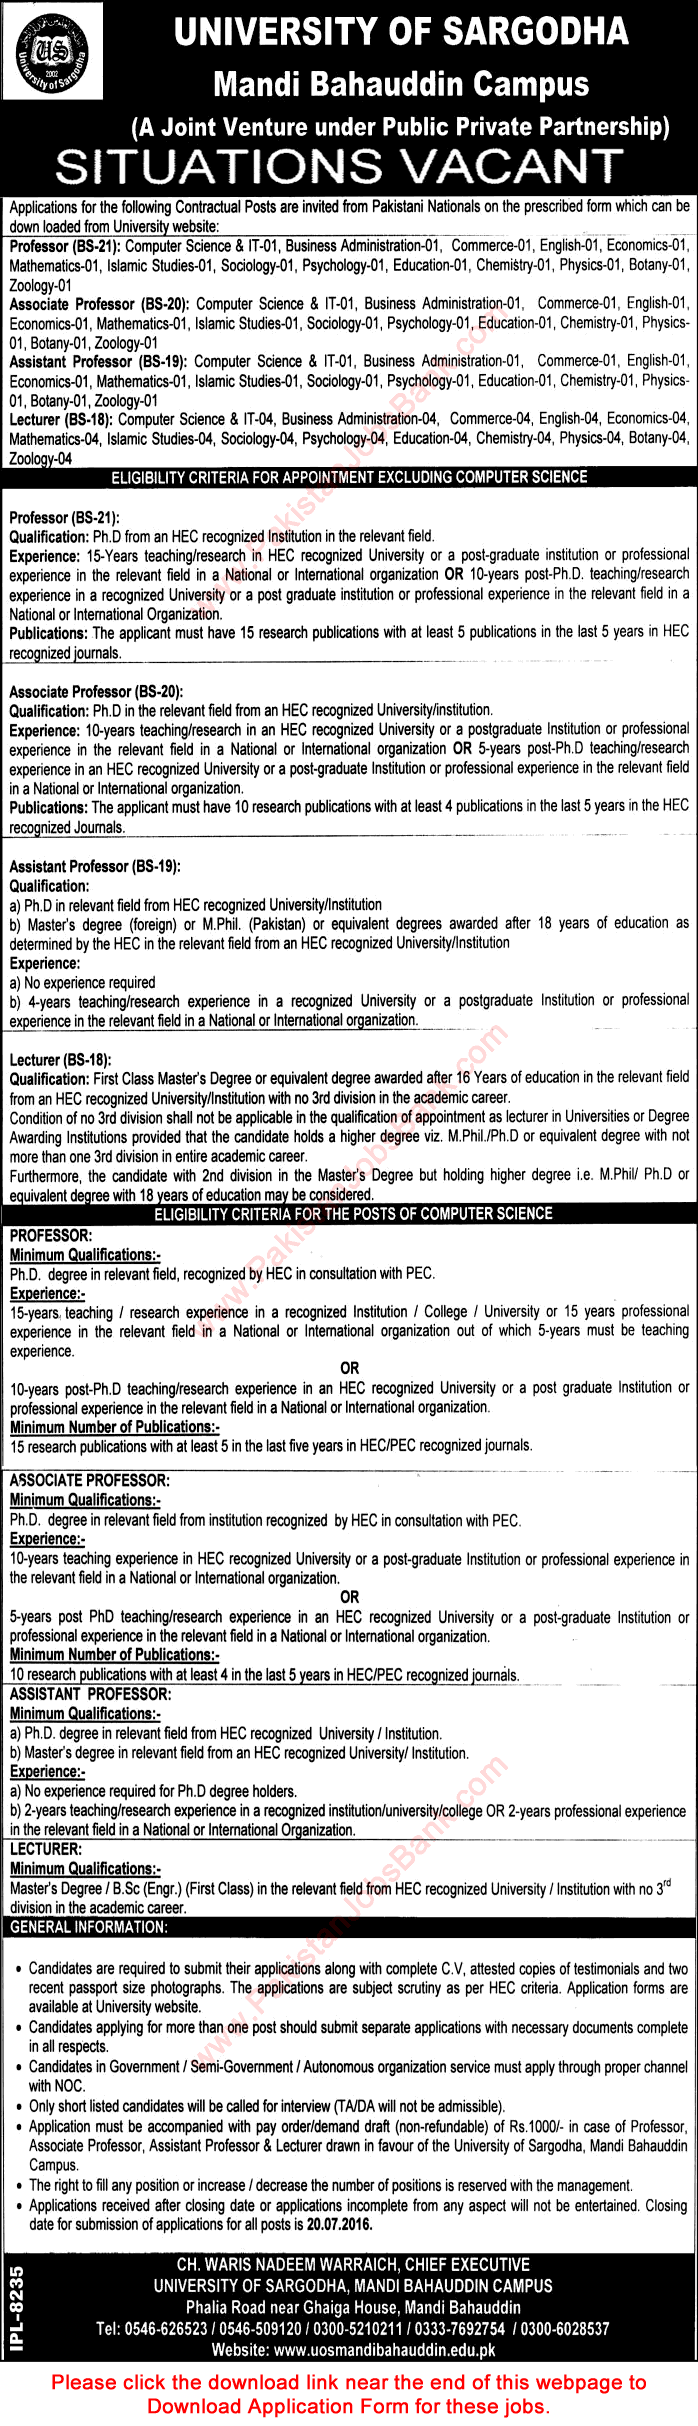 University of Sargodha Mandi Bahauddin Campus Jobs 2016 July Application Form Teaching Faculty Latest